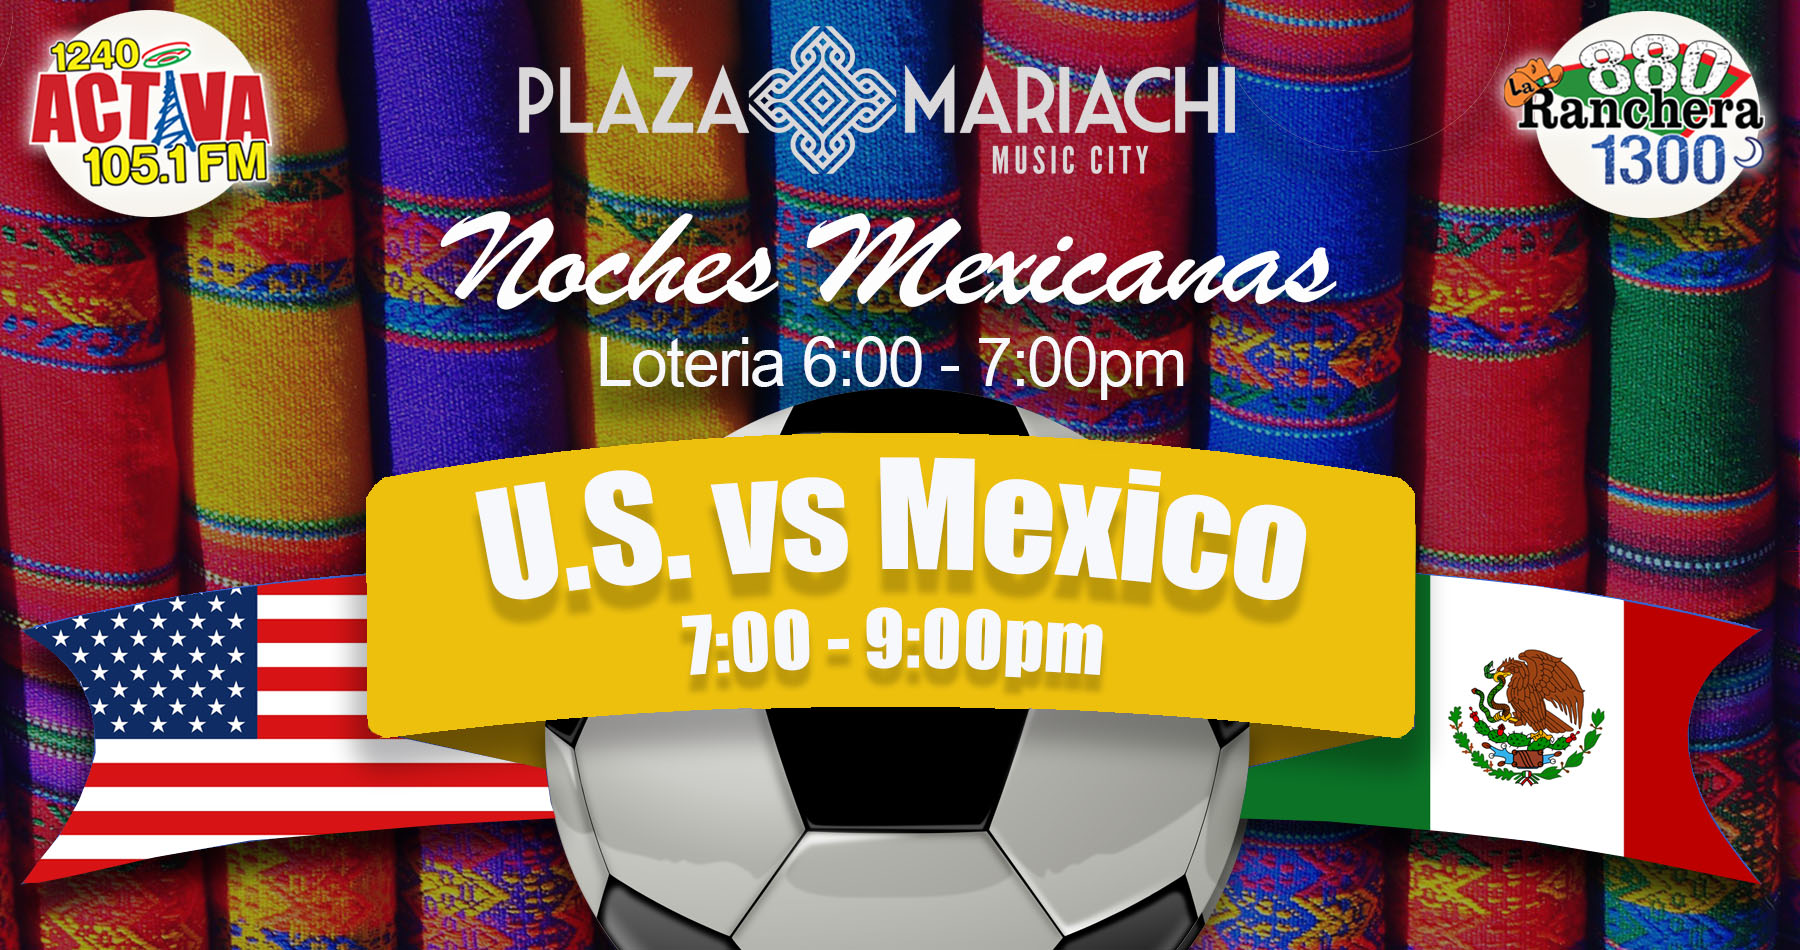 USA vs Mexico on the Large LED Screen! | Plaza Mariachi